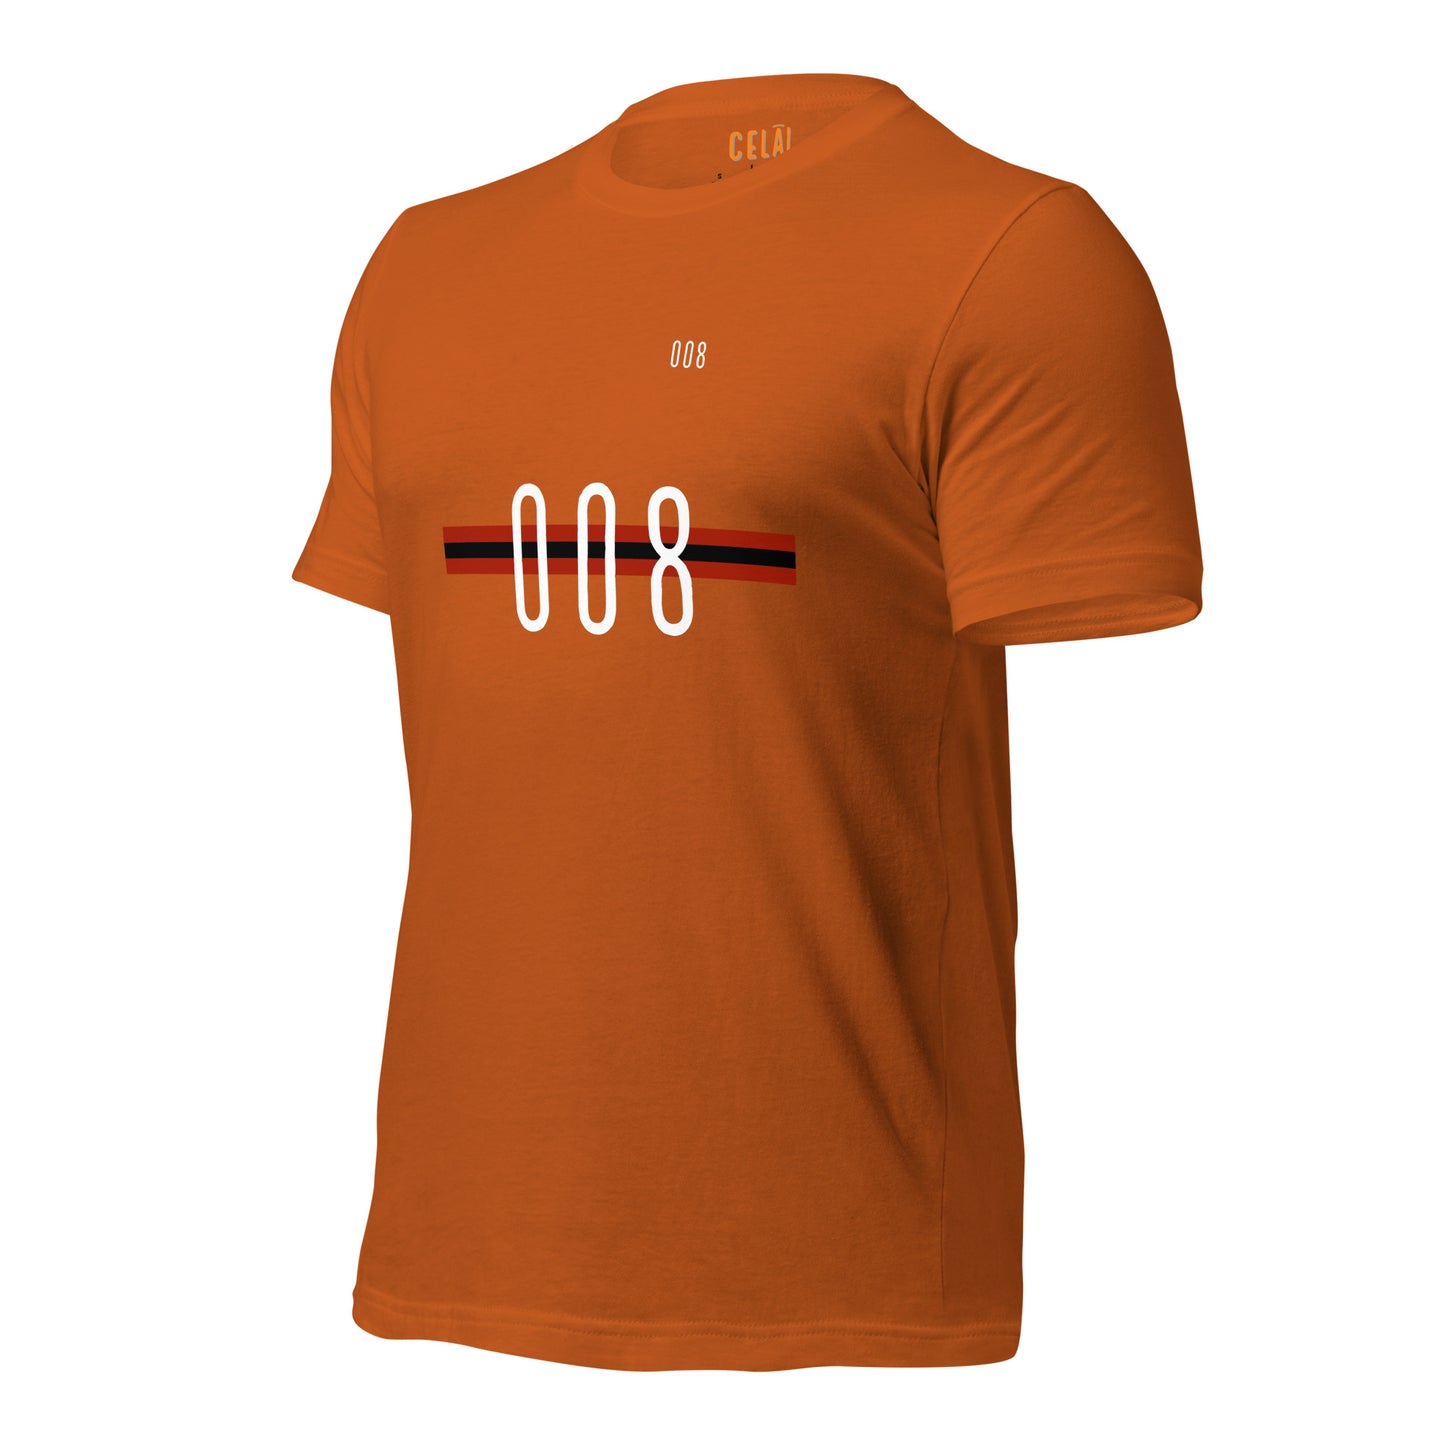 008 Unisex t-shirt